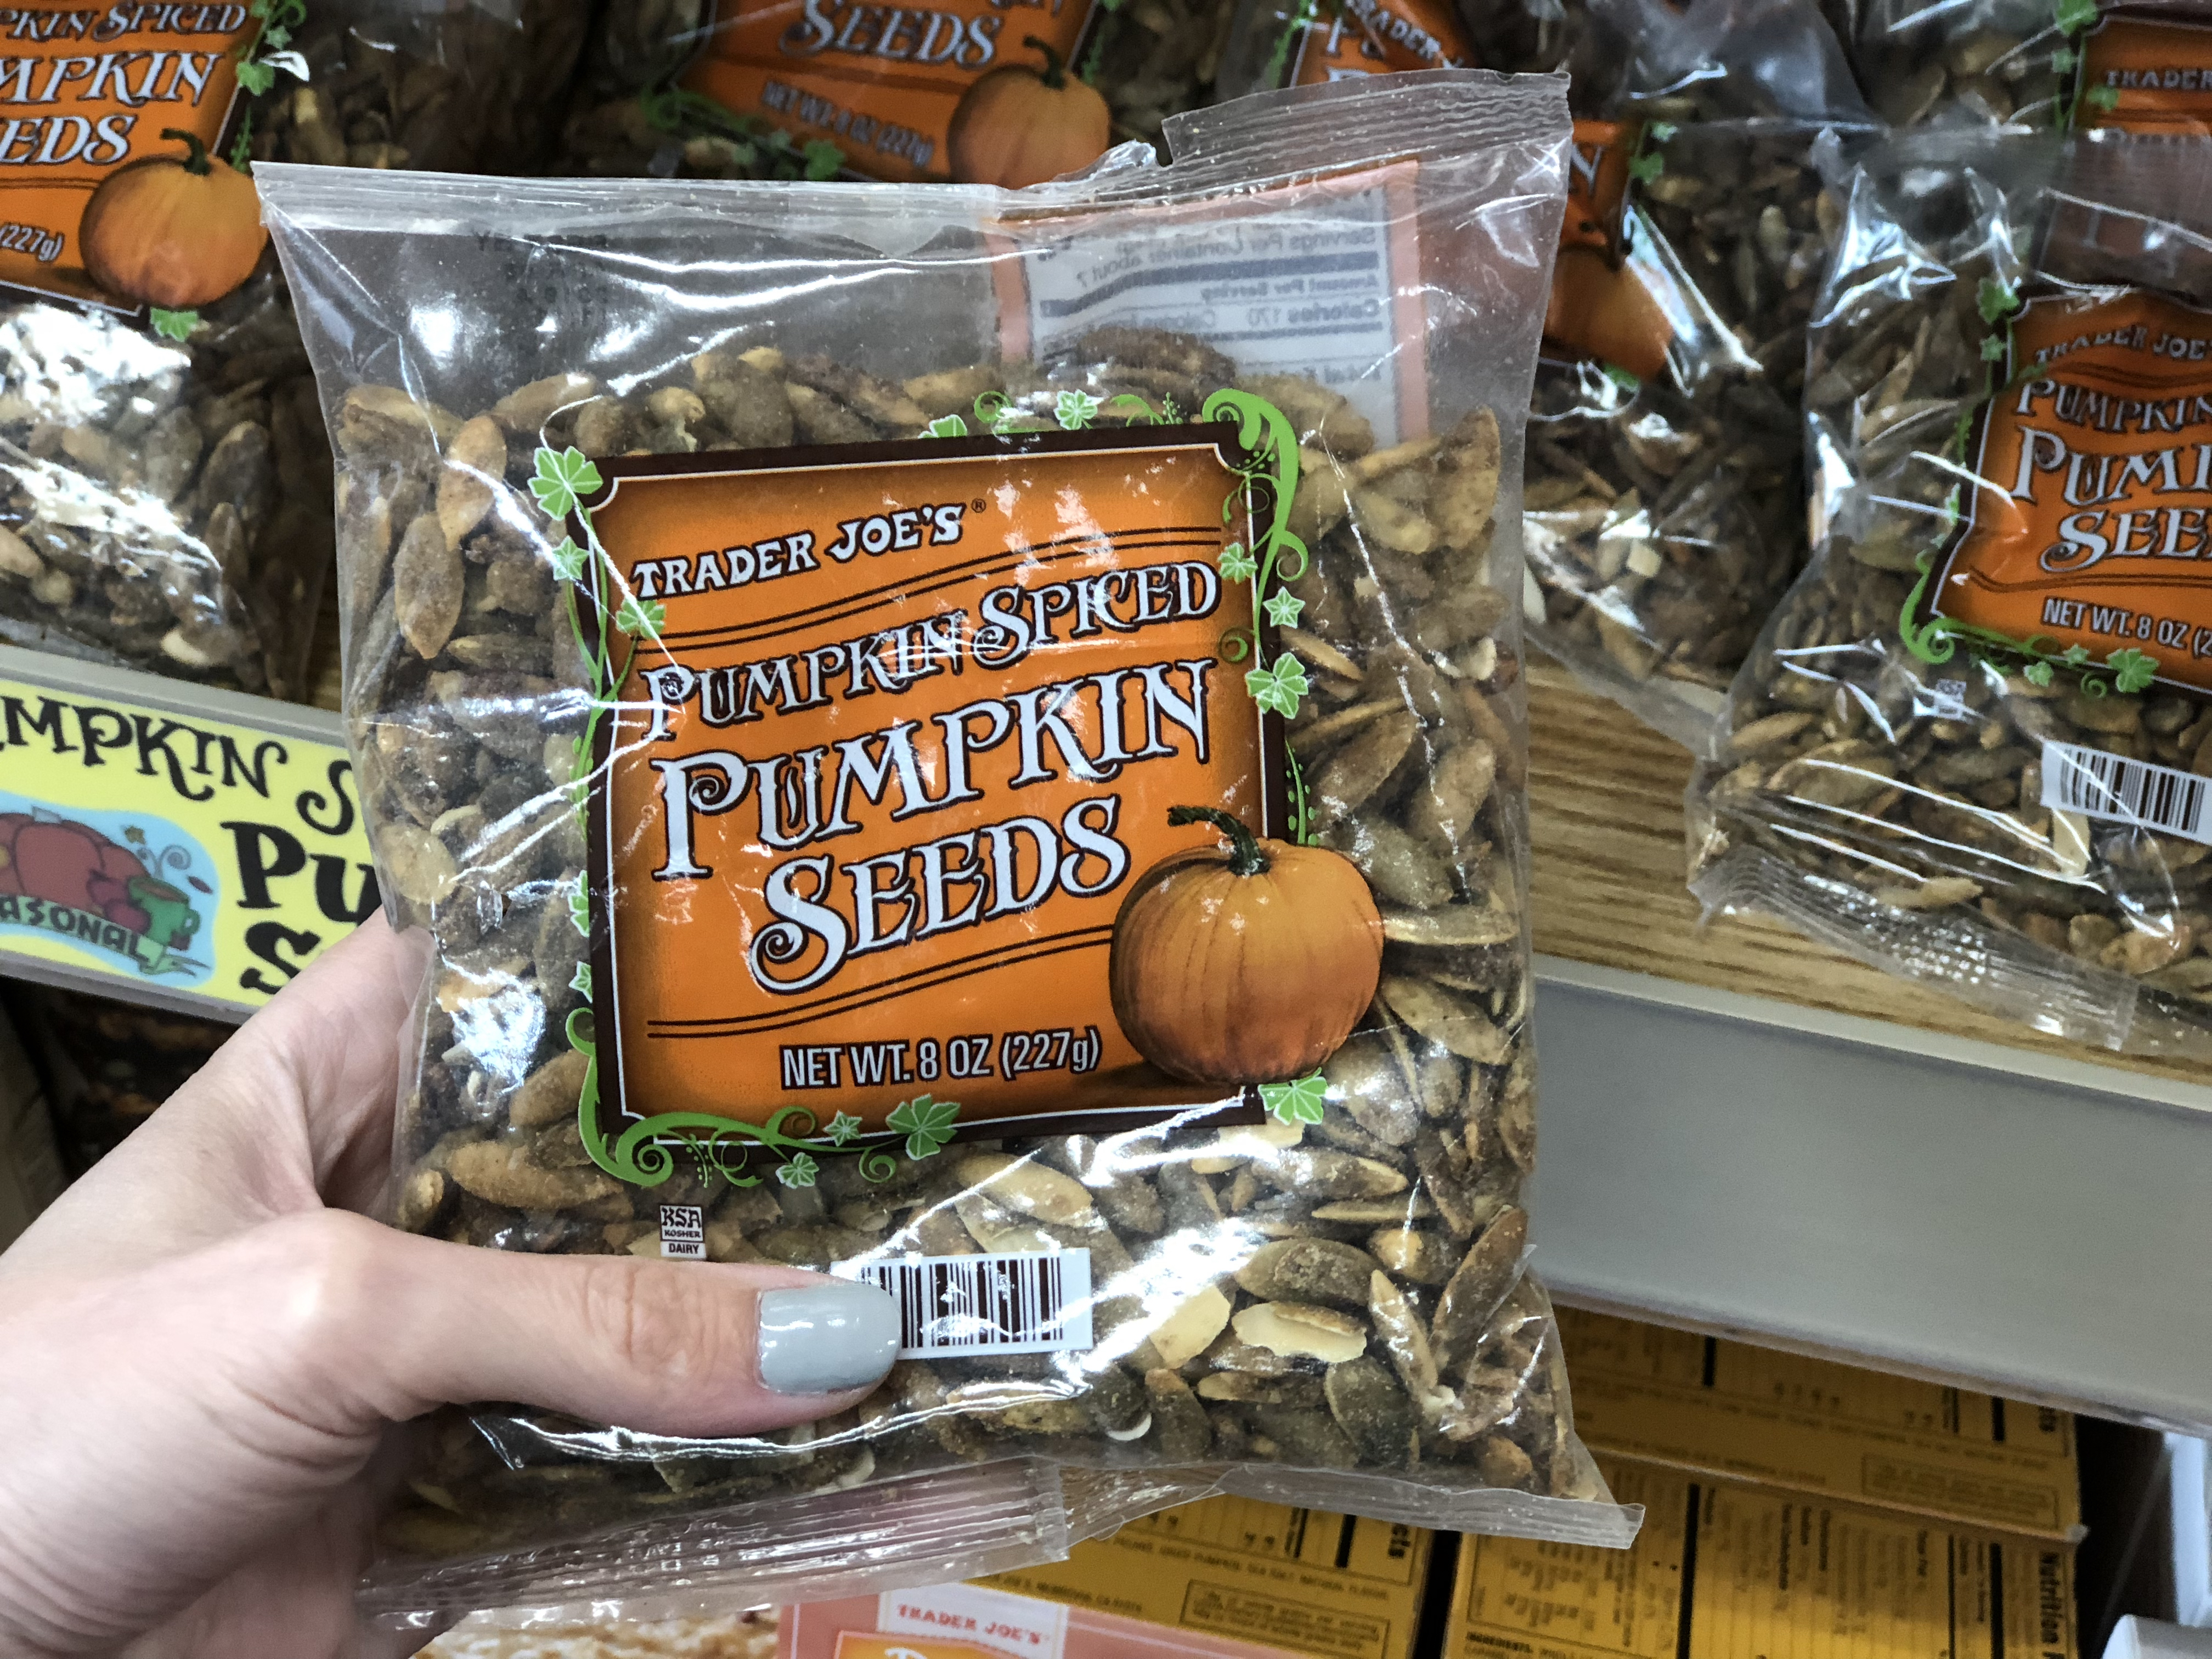 Deals on Trader Joe's Pumpkin items – Pumpkin Seeds at Trader Joe's